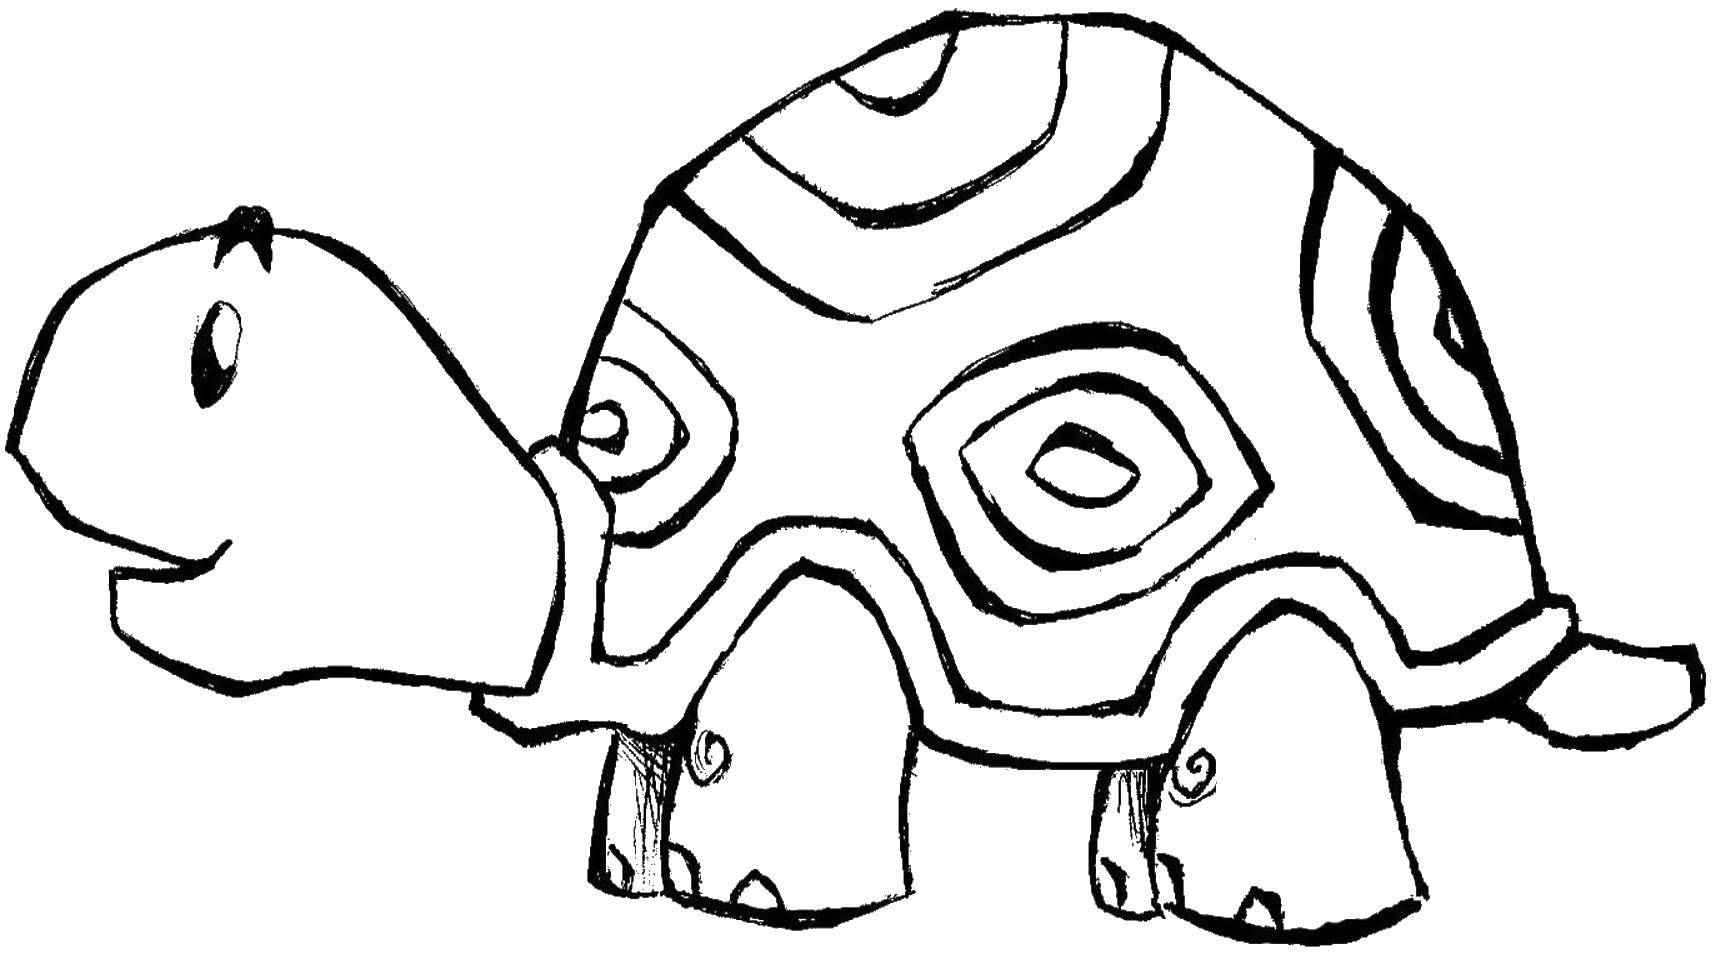 Название: Раскраска Пакемон черепашка. Категория: игрушка. Теги: Игрушка, черепаха.